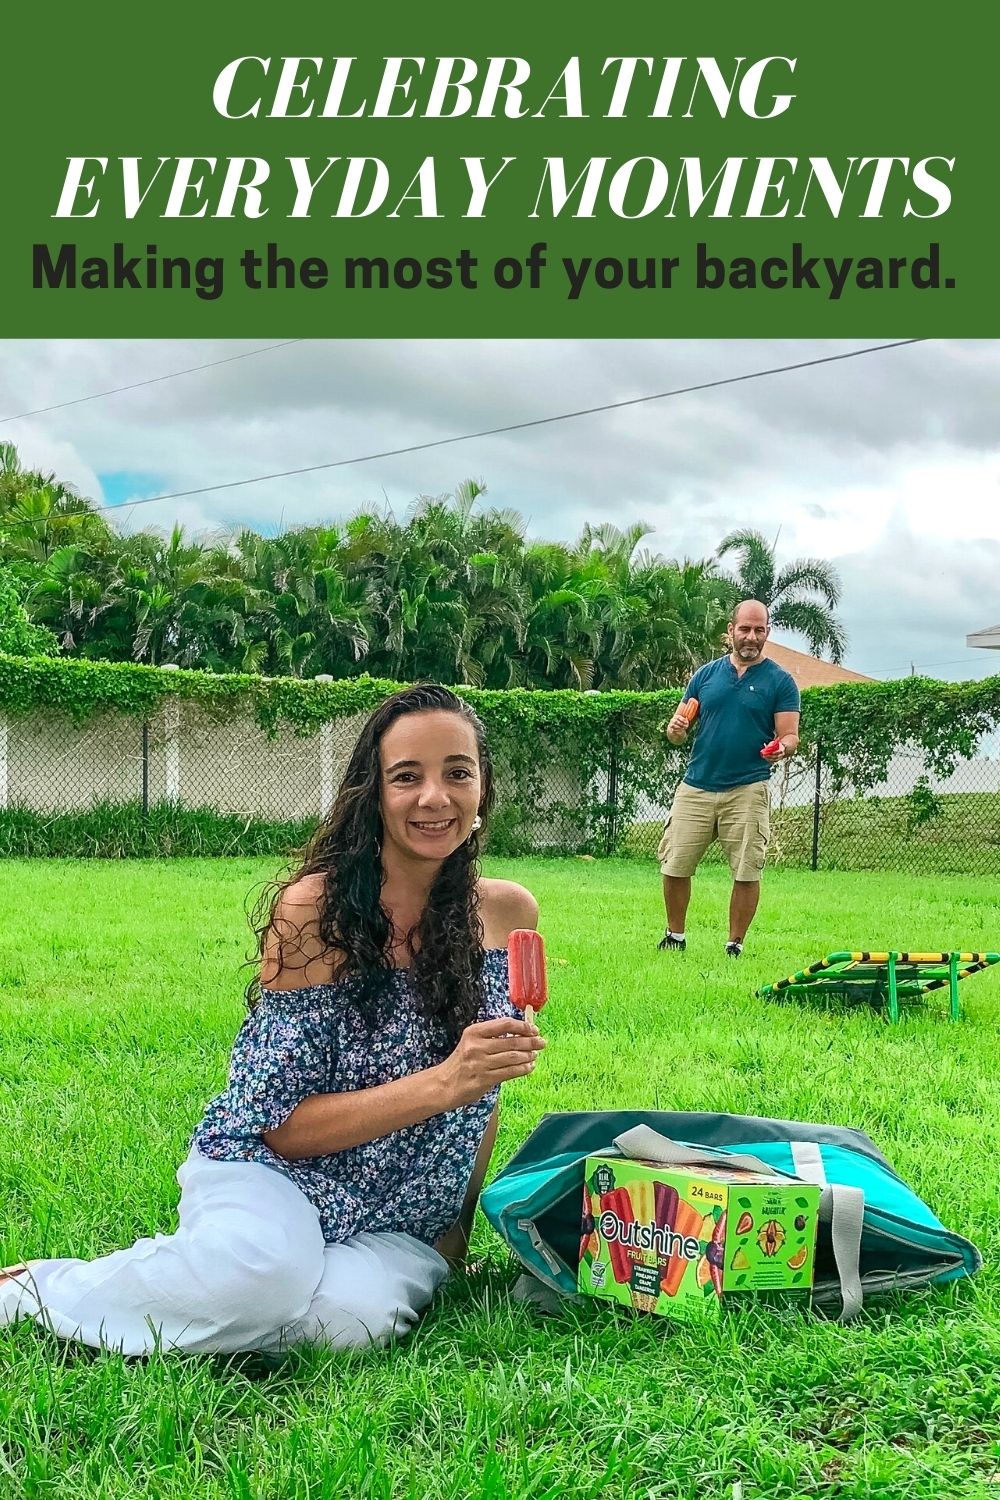 Backyard picnic tips and ideas